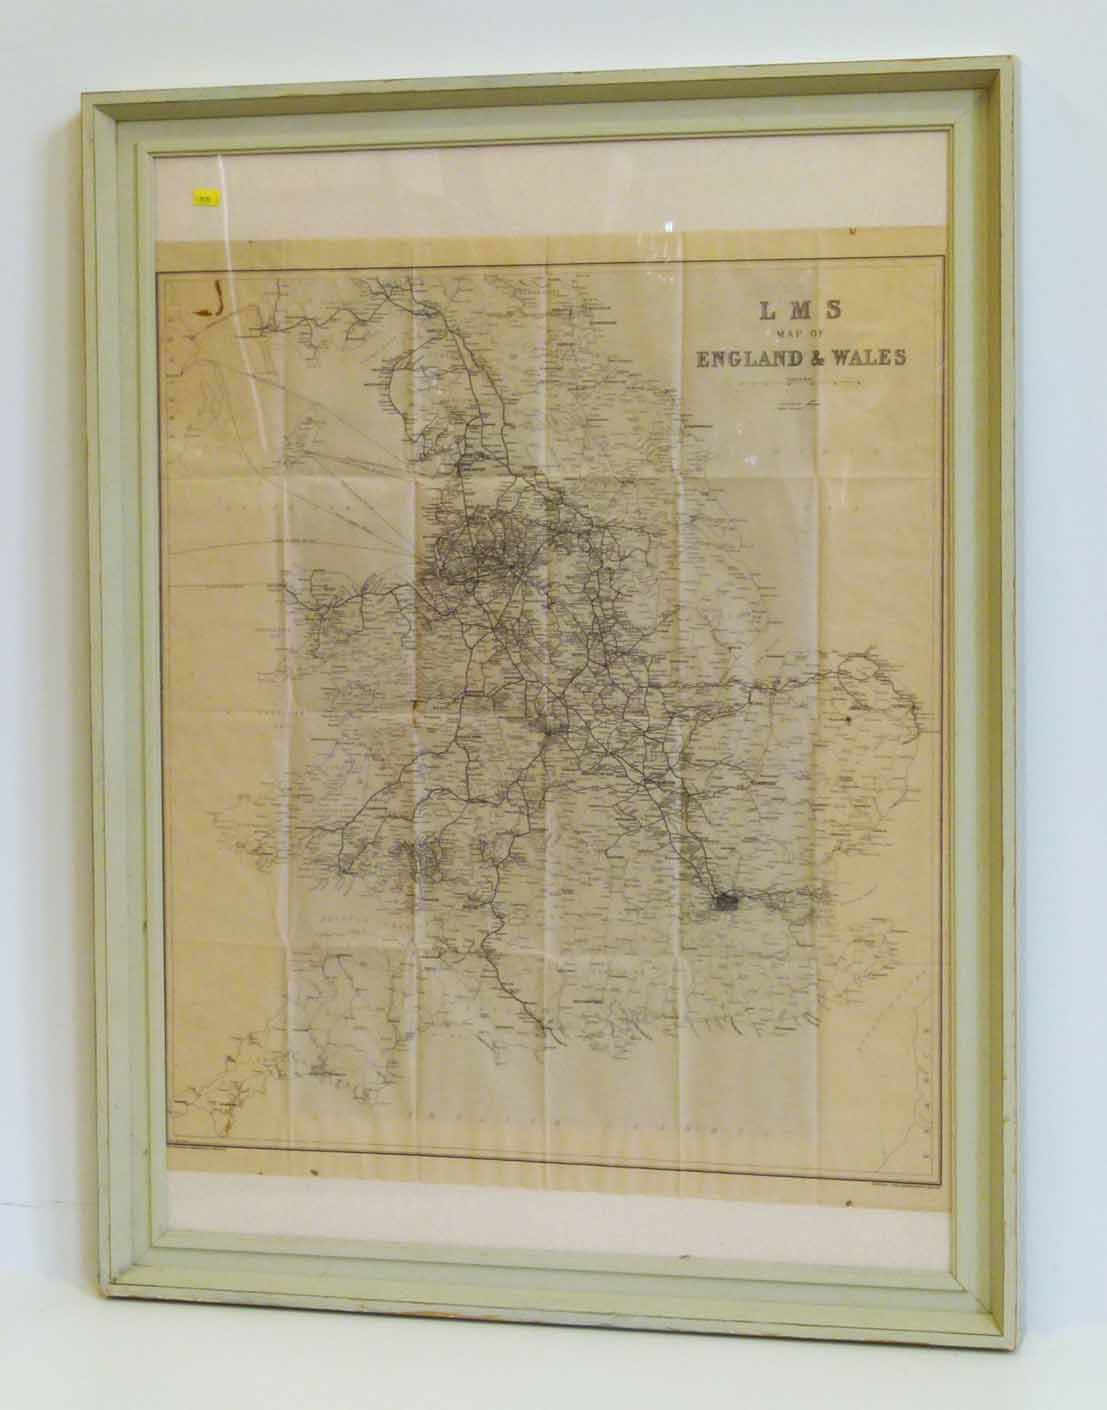 Framed LMS map of England & Wales 69cm x 92cm, copyright John Bartholomew & Sons Ltd Condition